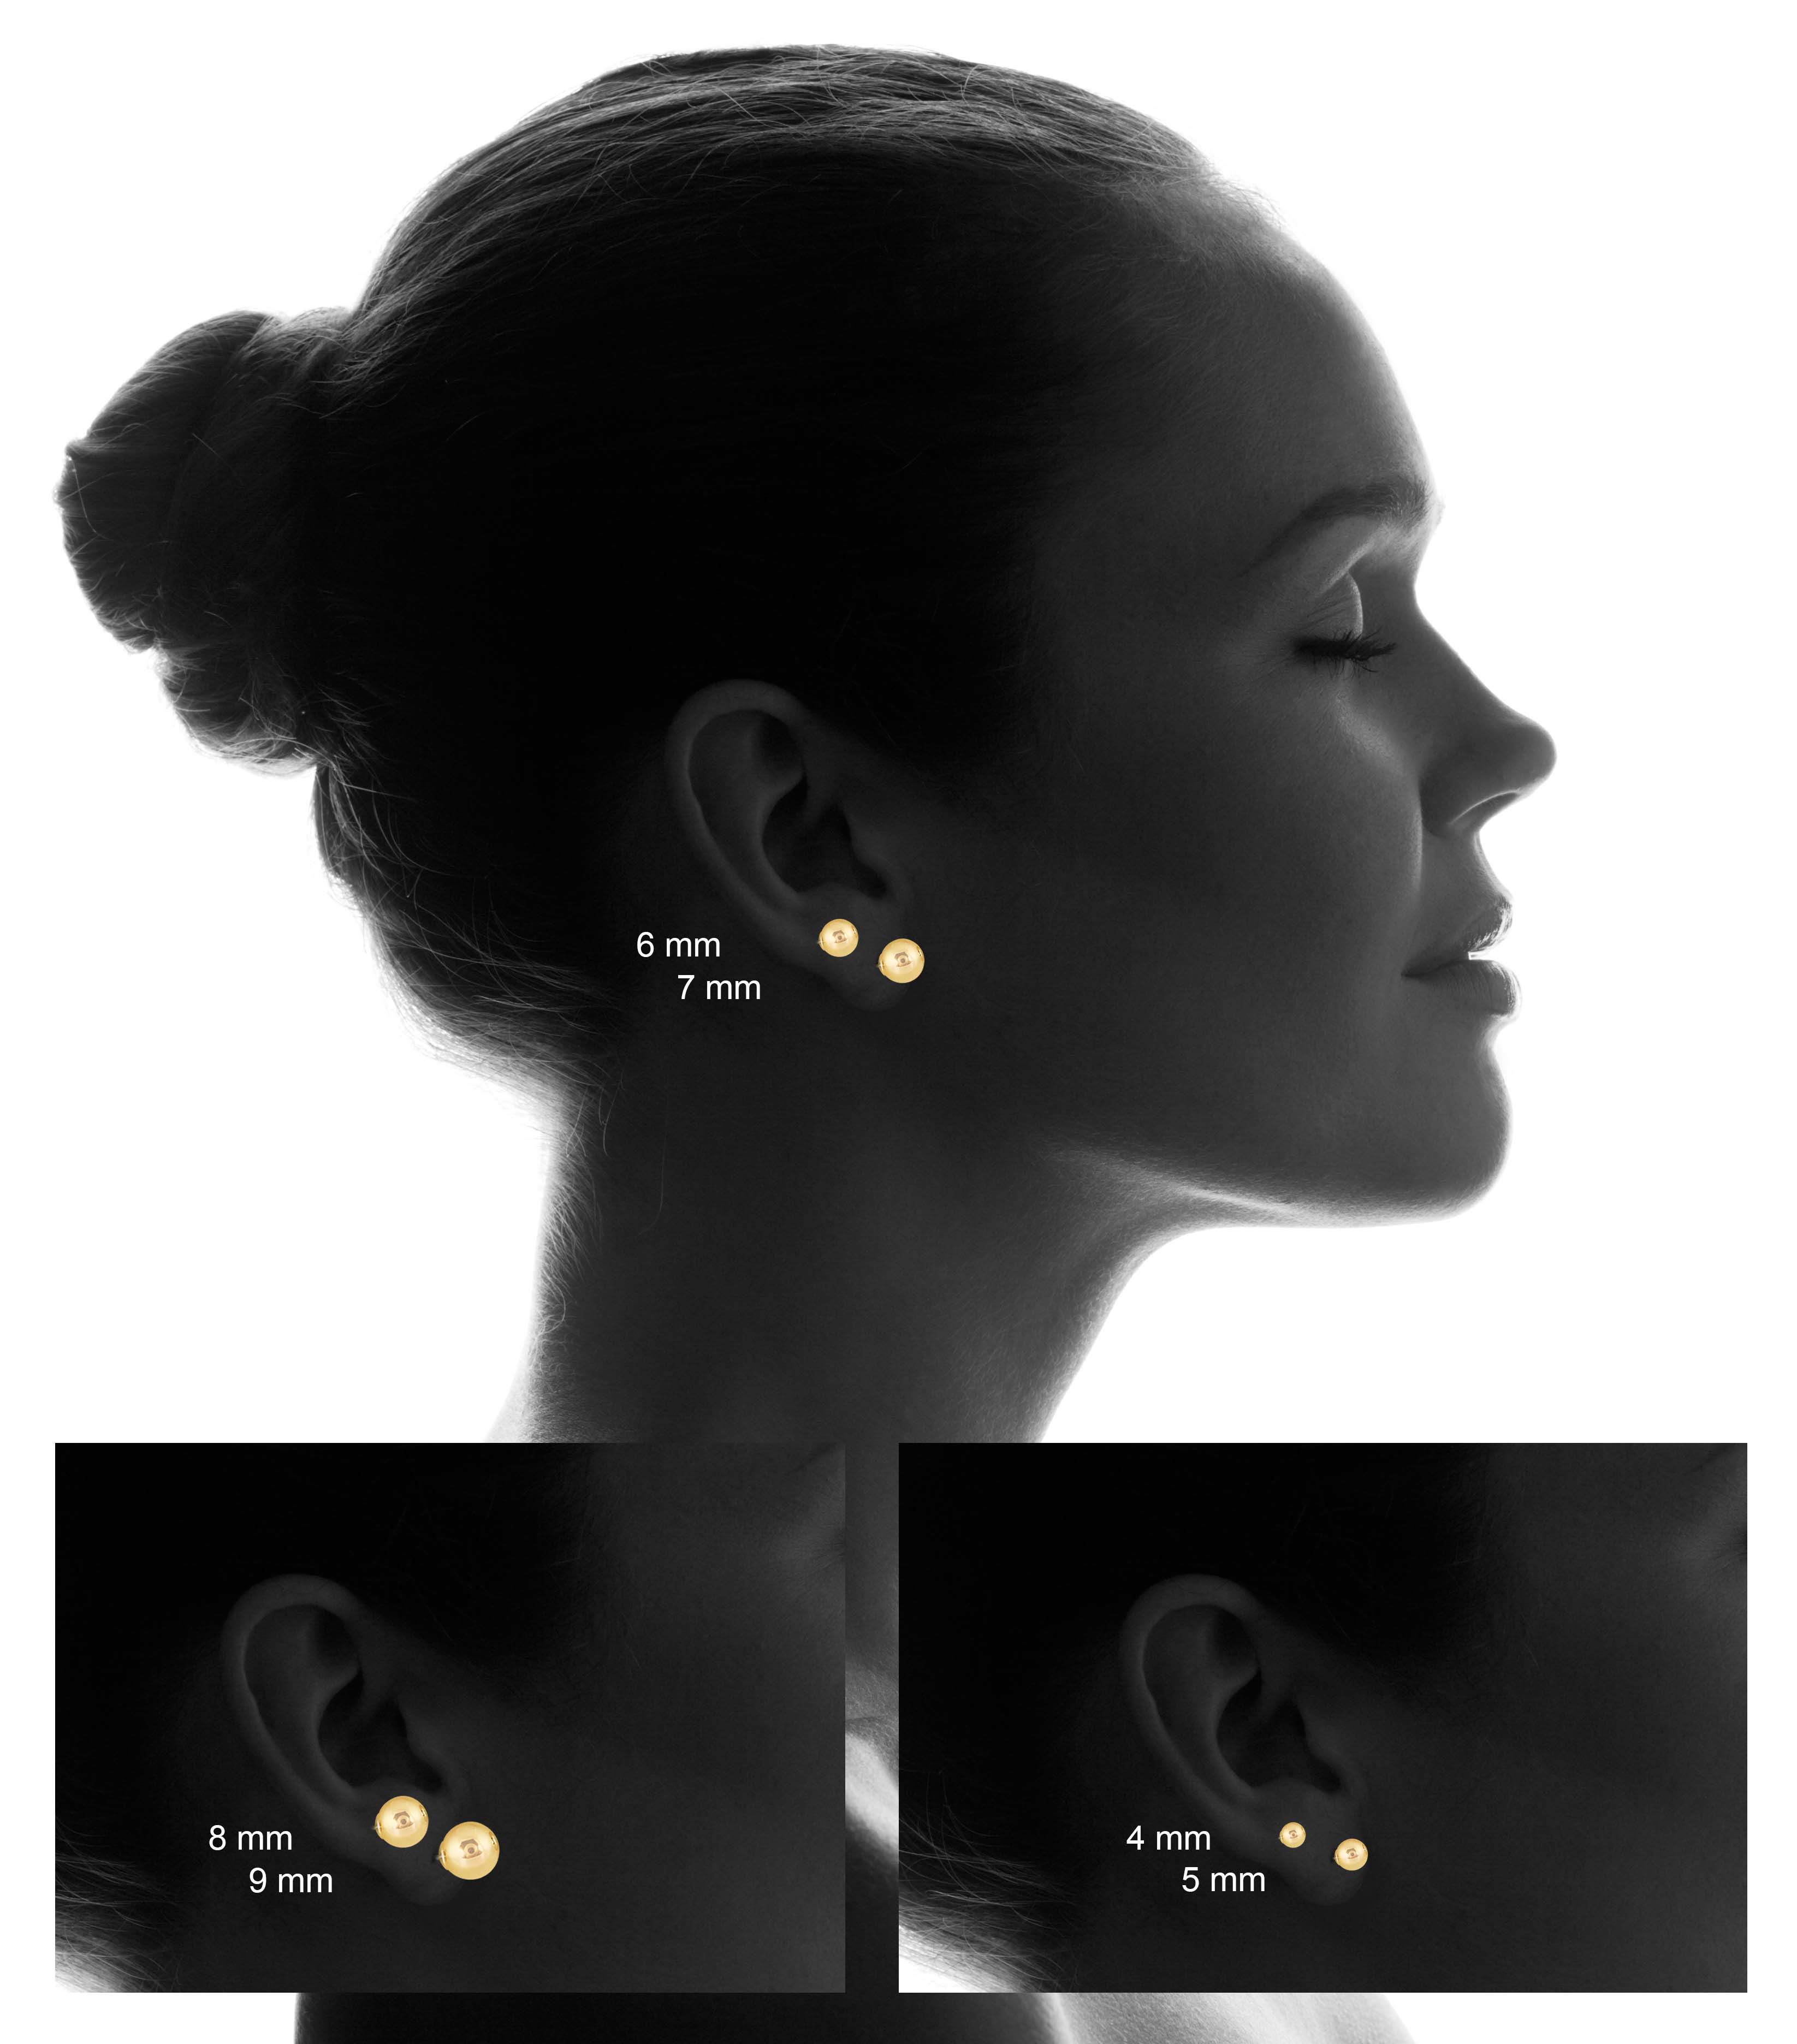 szul.com 14K Yellow Gold 6mm Laser Cut Ball Stud Earrings